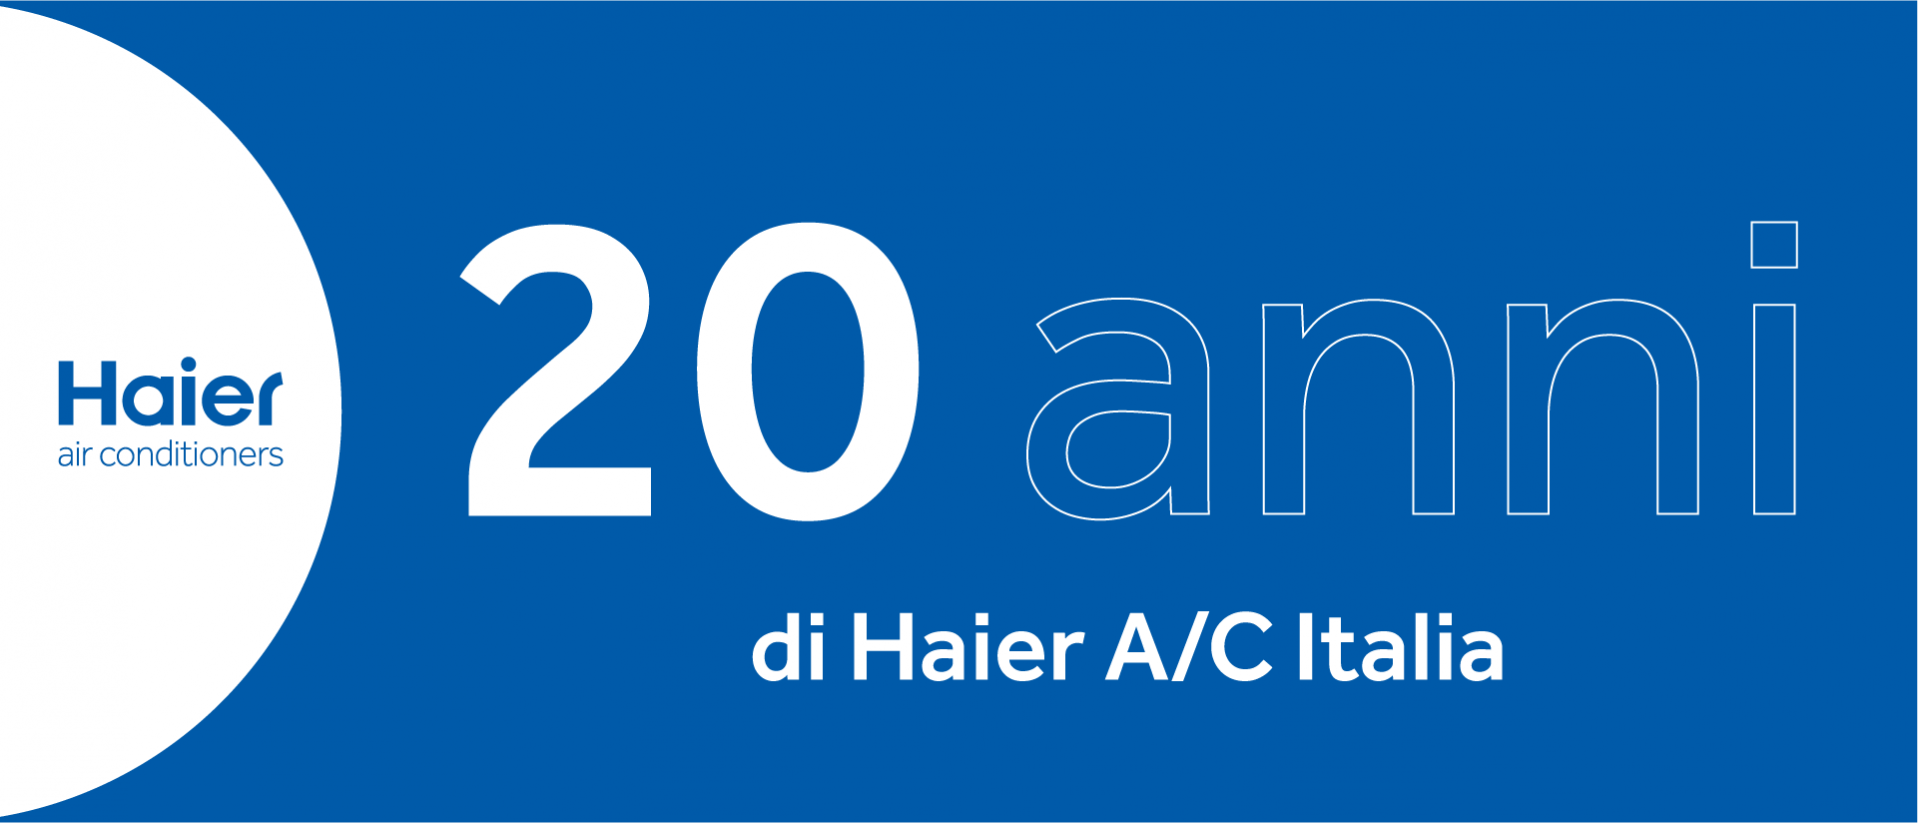 Haier A/C Italia: 20 anni di storia 